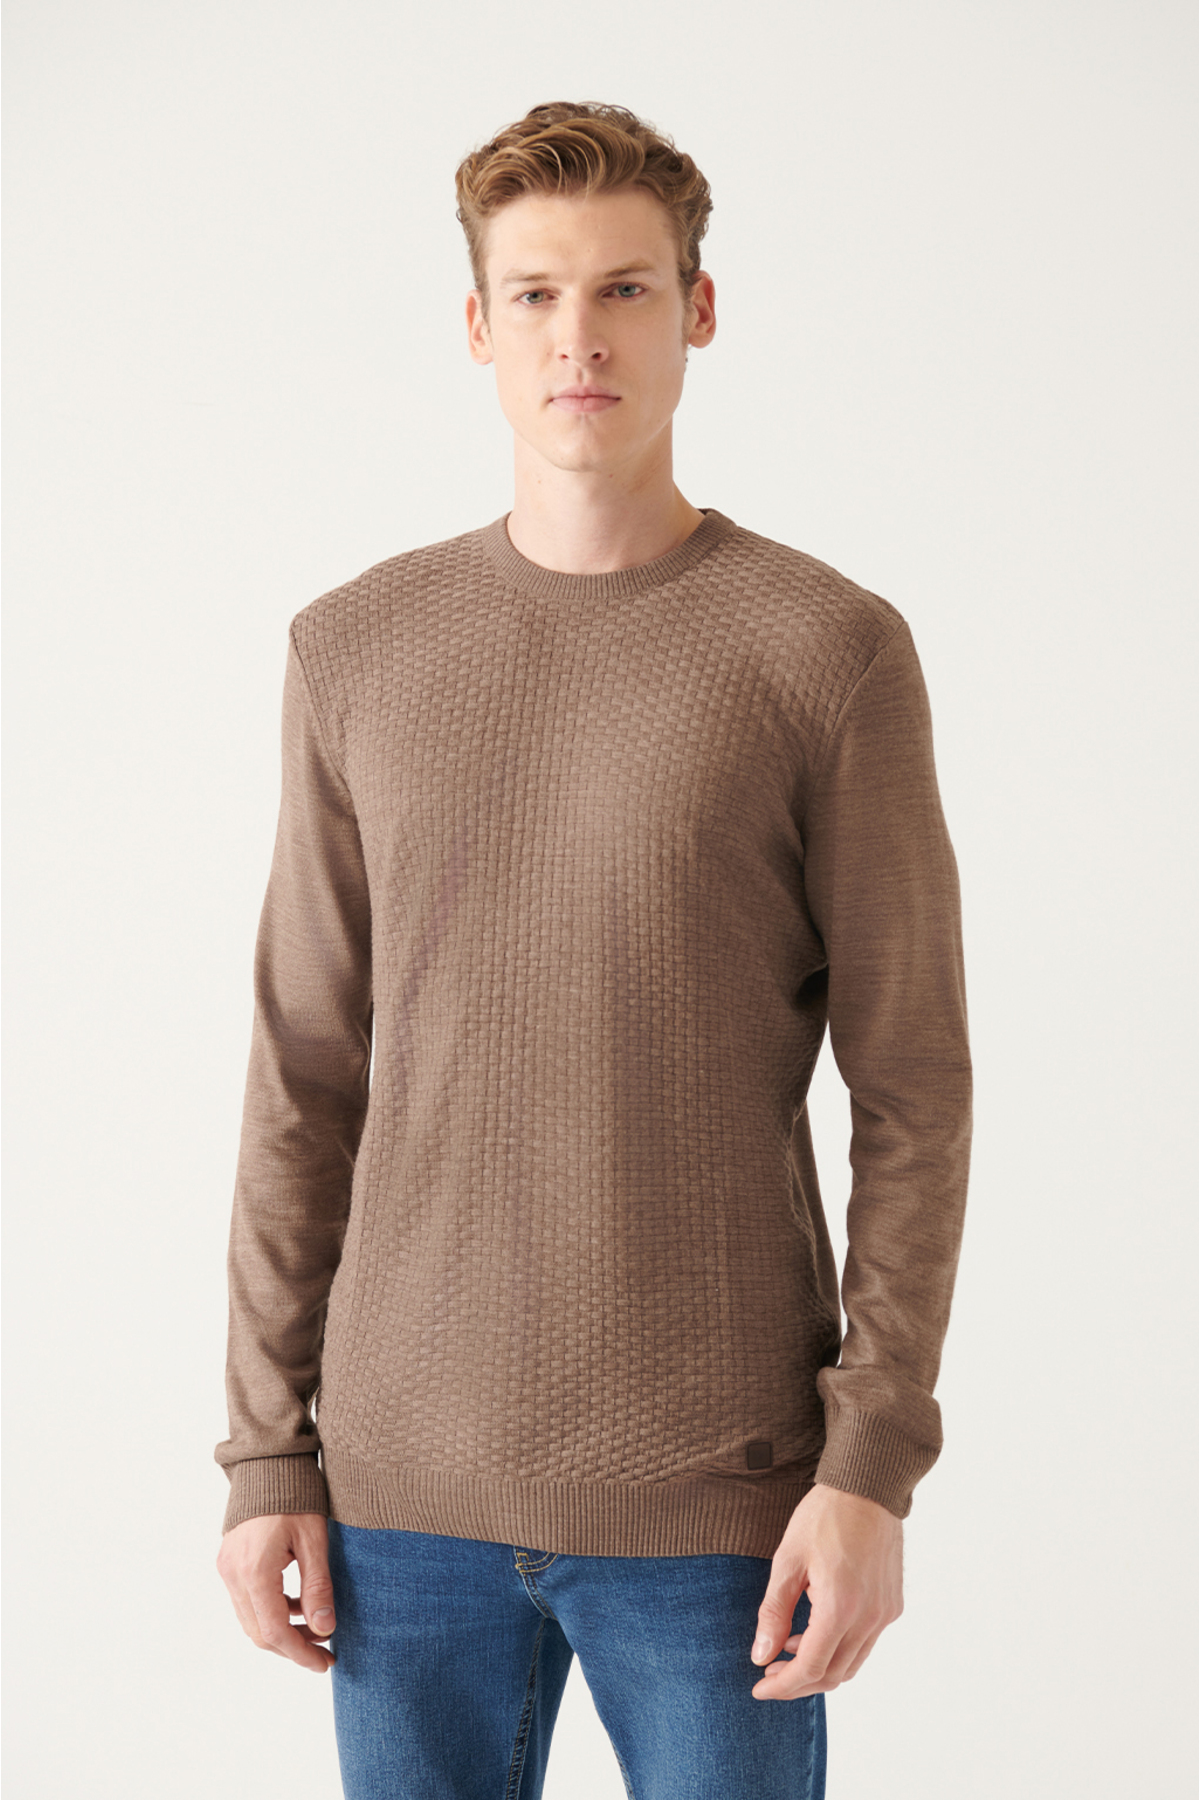 Avva Men's Mink Crew Neck Front Textured Standard Fit Normal Cut Knitwear Sweater